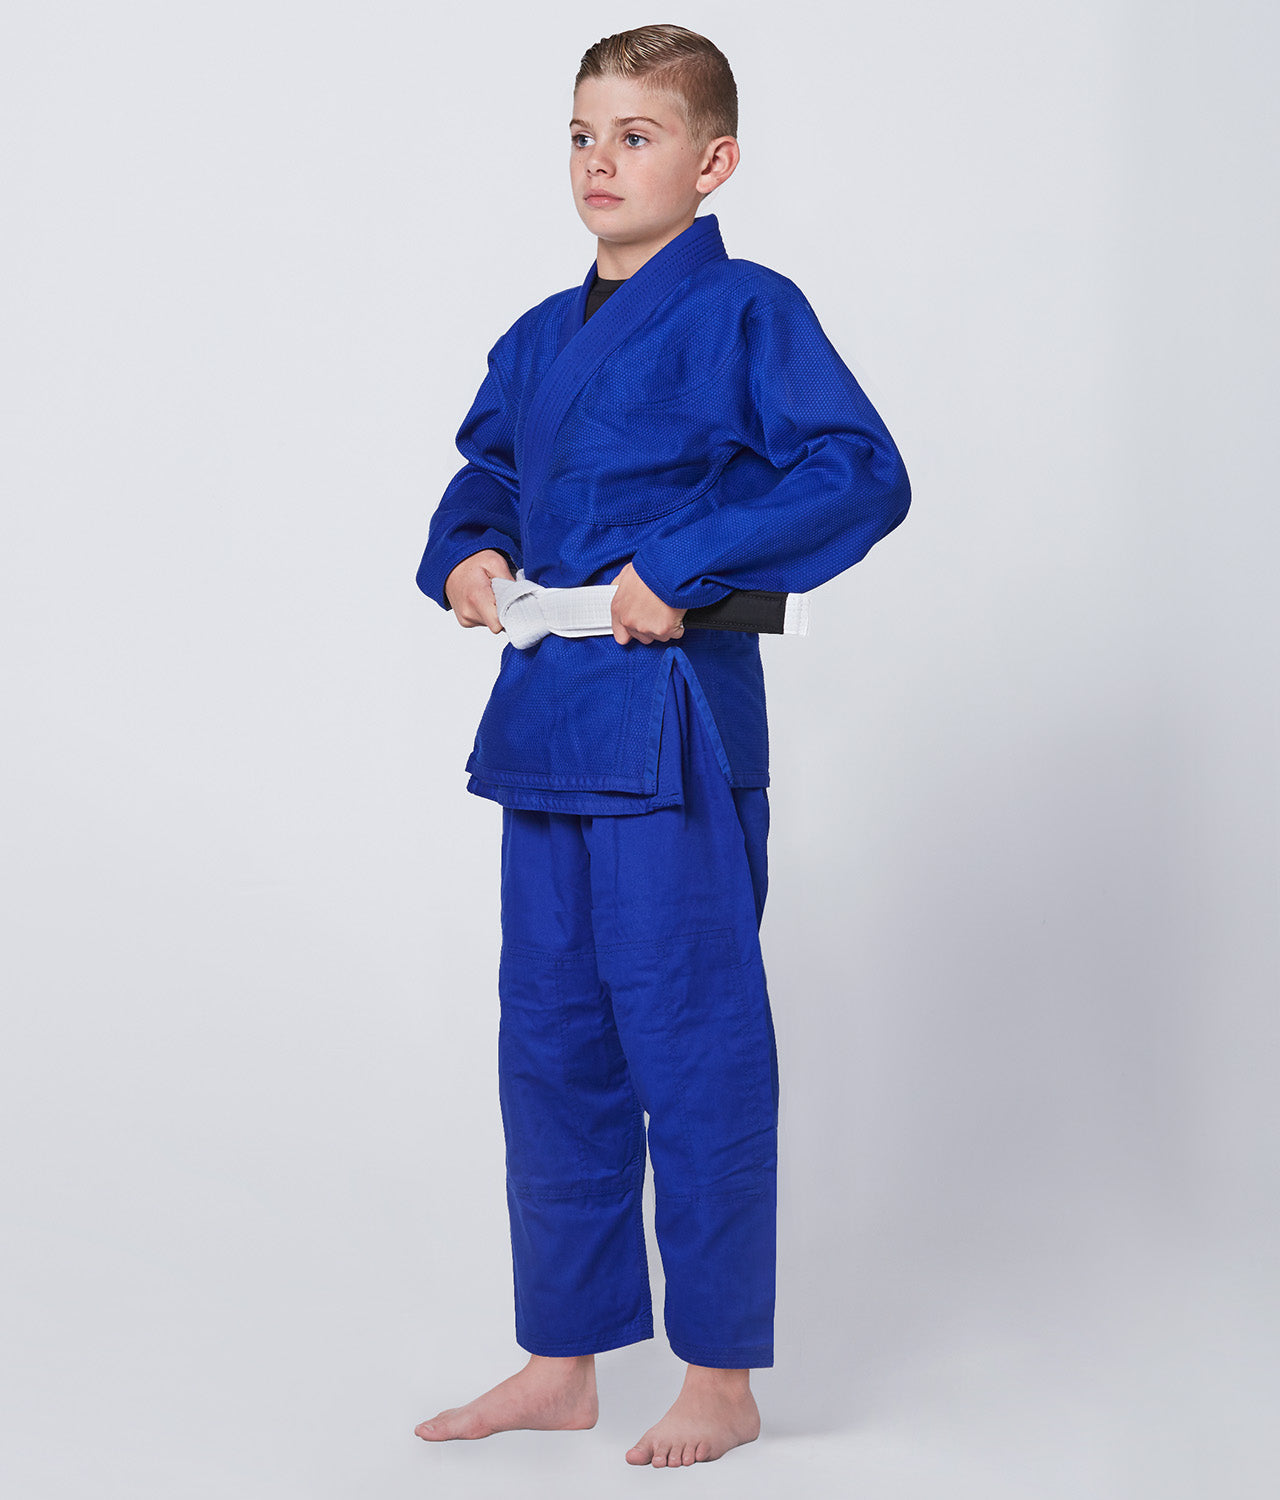 Elite Sports Kids' Essential Blue Brazilian Jiu Jitsu BJJ Gi Side View